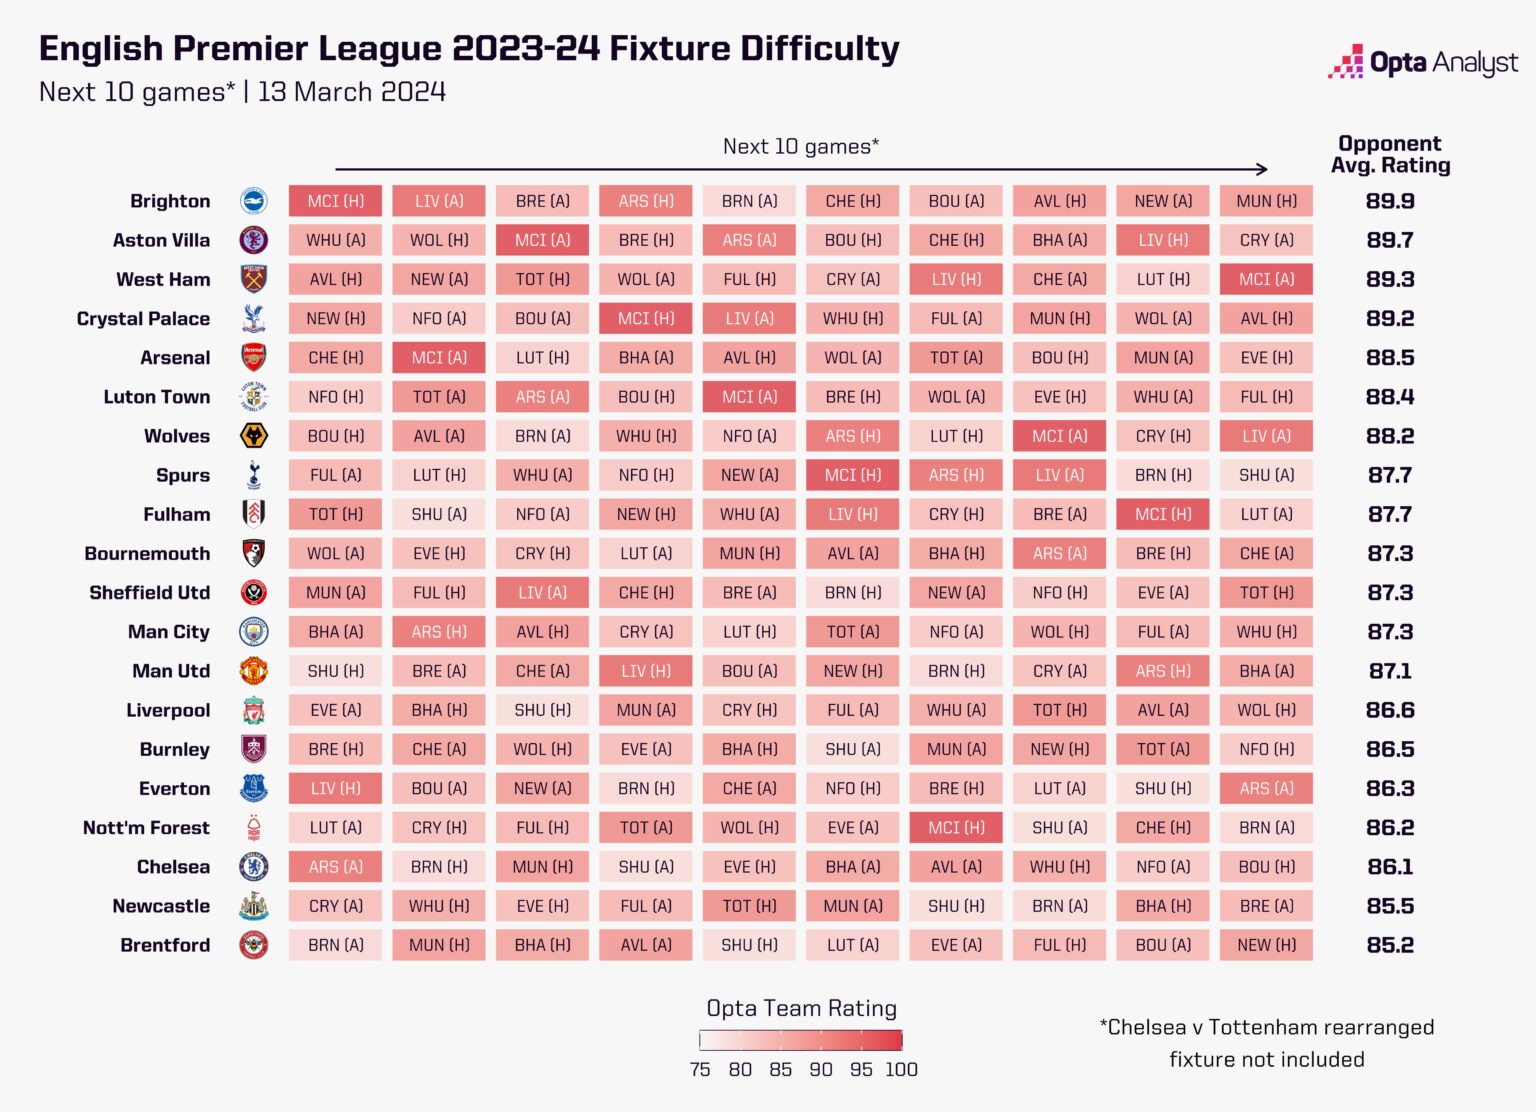 premier-league-fixture-difficulty-last-10-games-of-2023-24-1536x1112.jpg